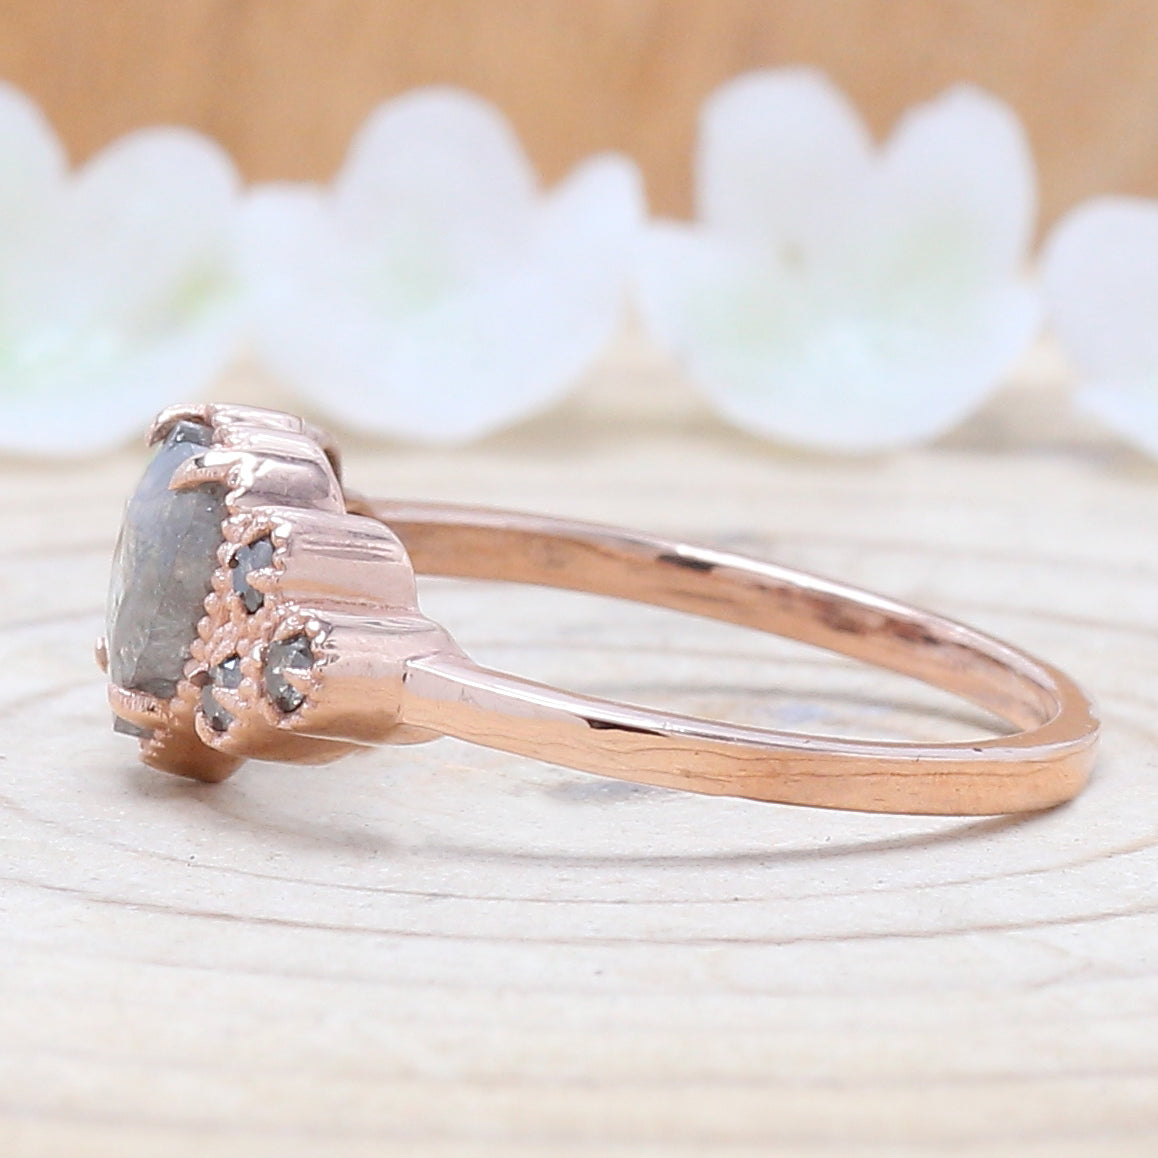 Heart Salt And Pepper Diamond Ring 0.65 Ct 6.65 MM Heart Shape Diamond Ring 14K Solid Rose Gold Silver Engagement Ring Gift For Her QL1627